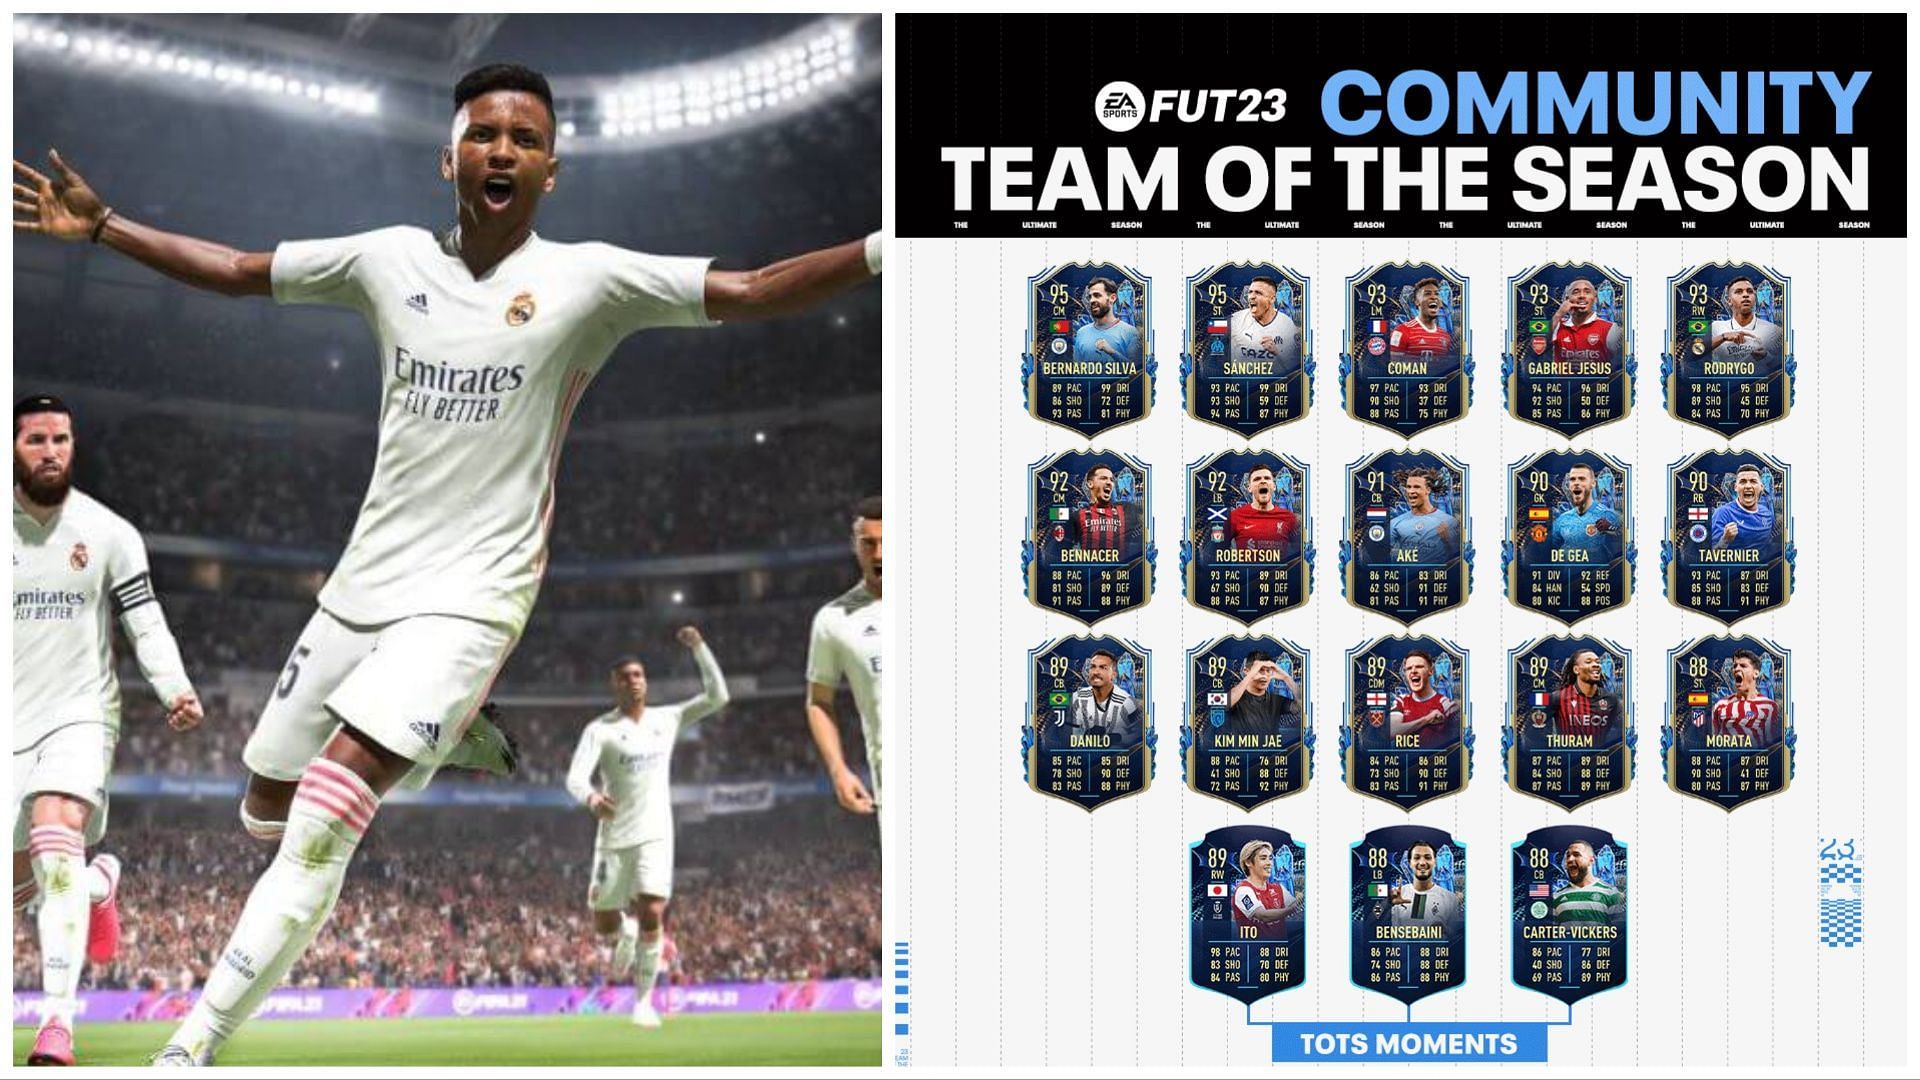 EA Sports reveals FIFA 23 Liga Portugal TOTS roster, featuring